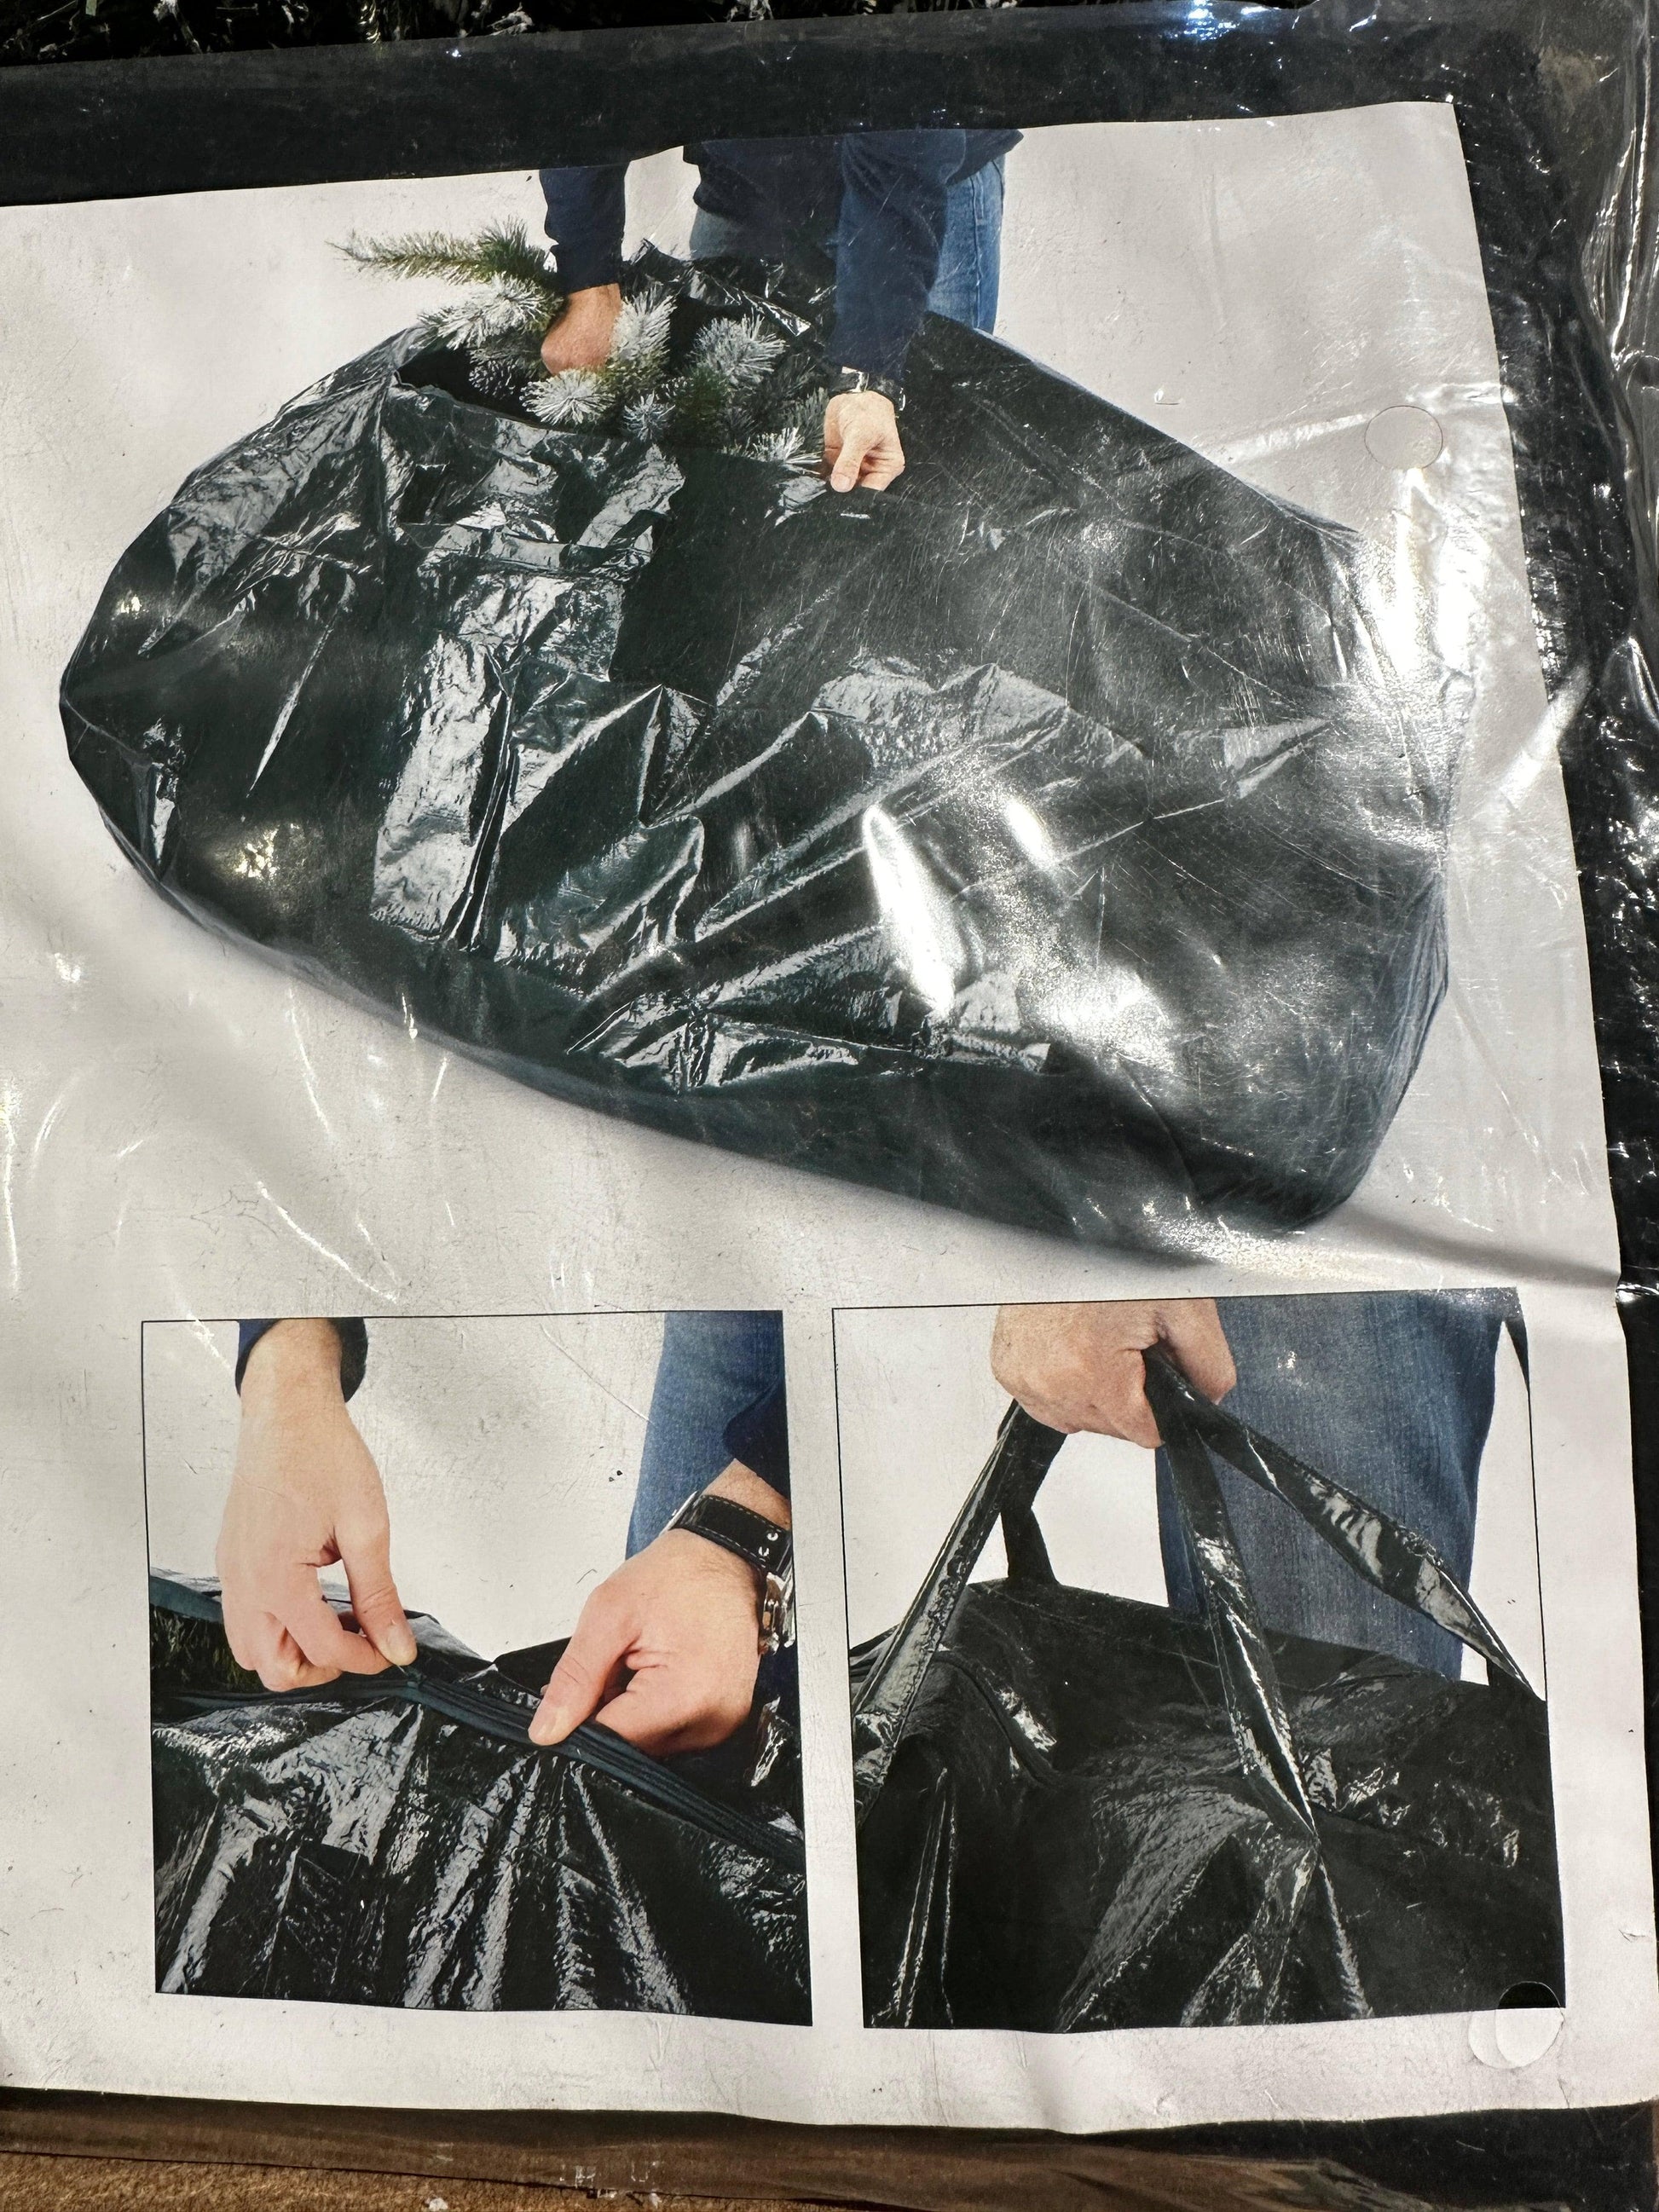 Christmas  -  Tree Storadge Bag Handles Zipper  -  60004697